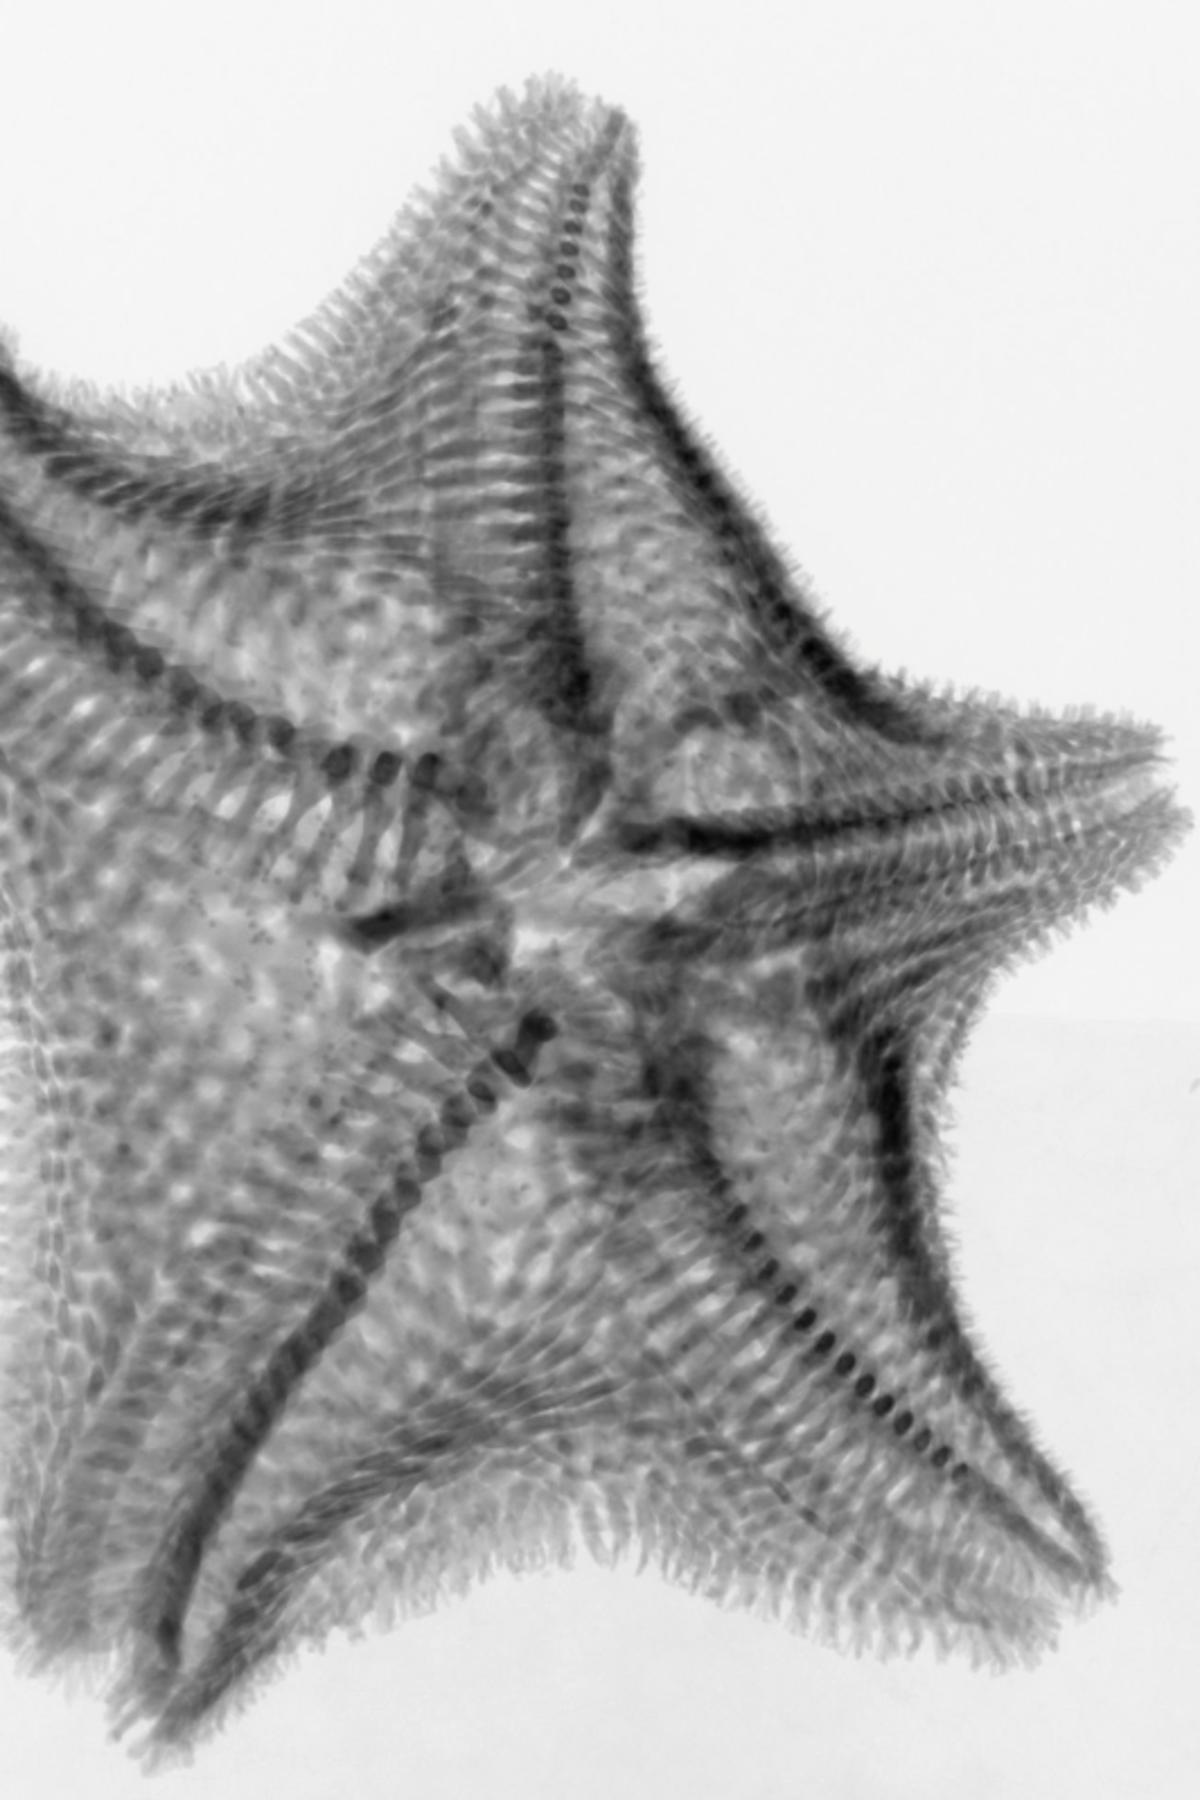 3D scanning reveals new (but extinct) star fish